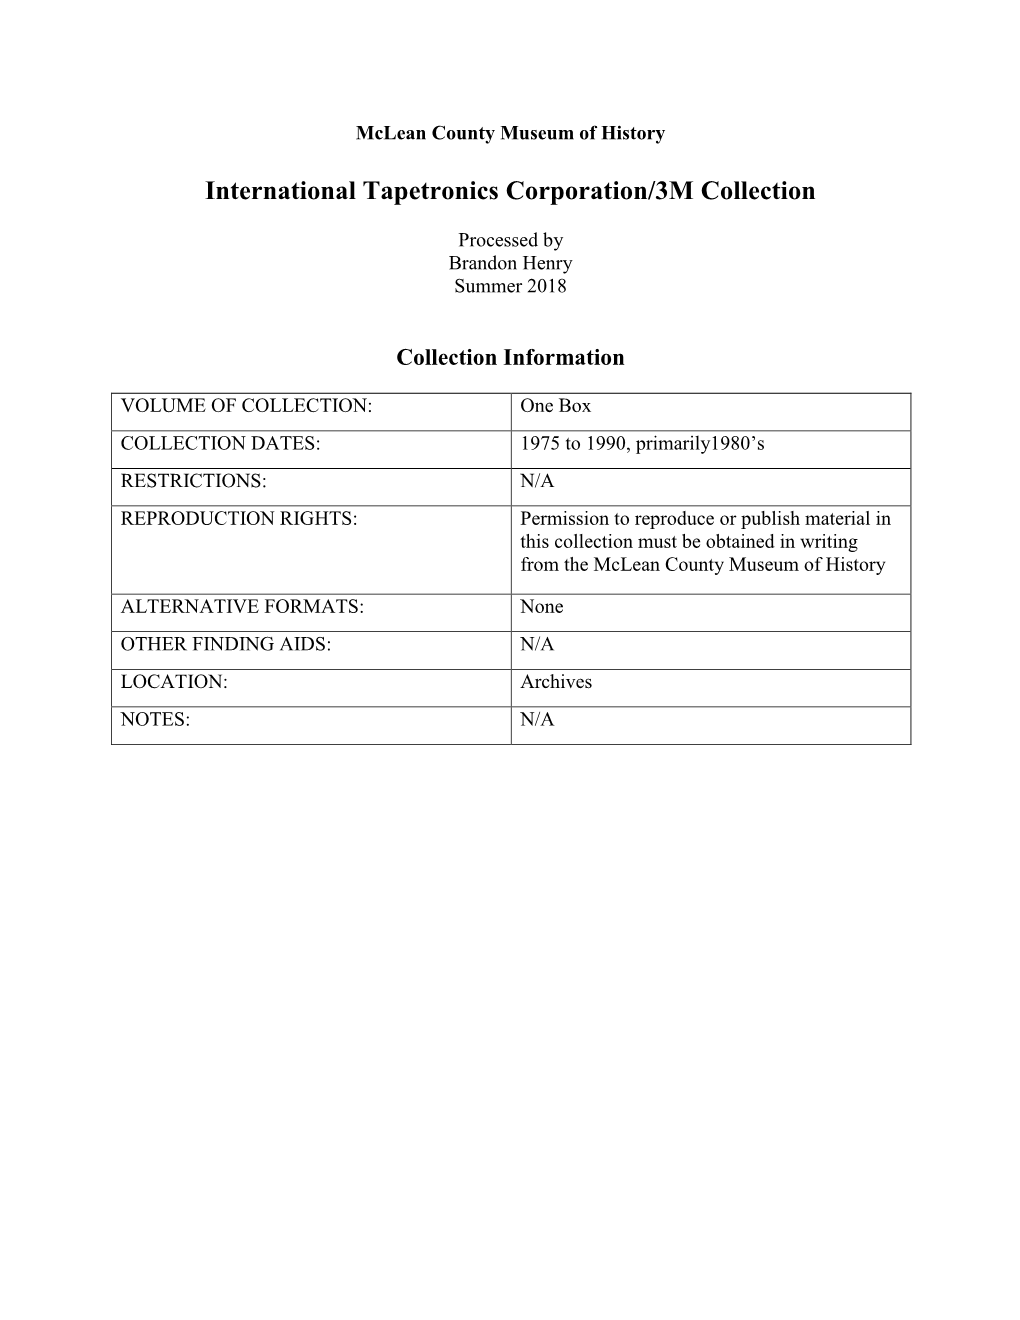 International Tapetronics Corporation/3M Collection